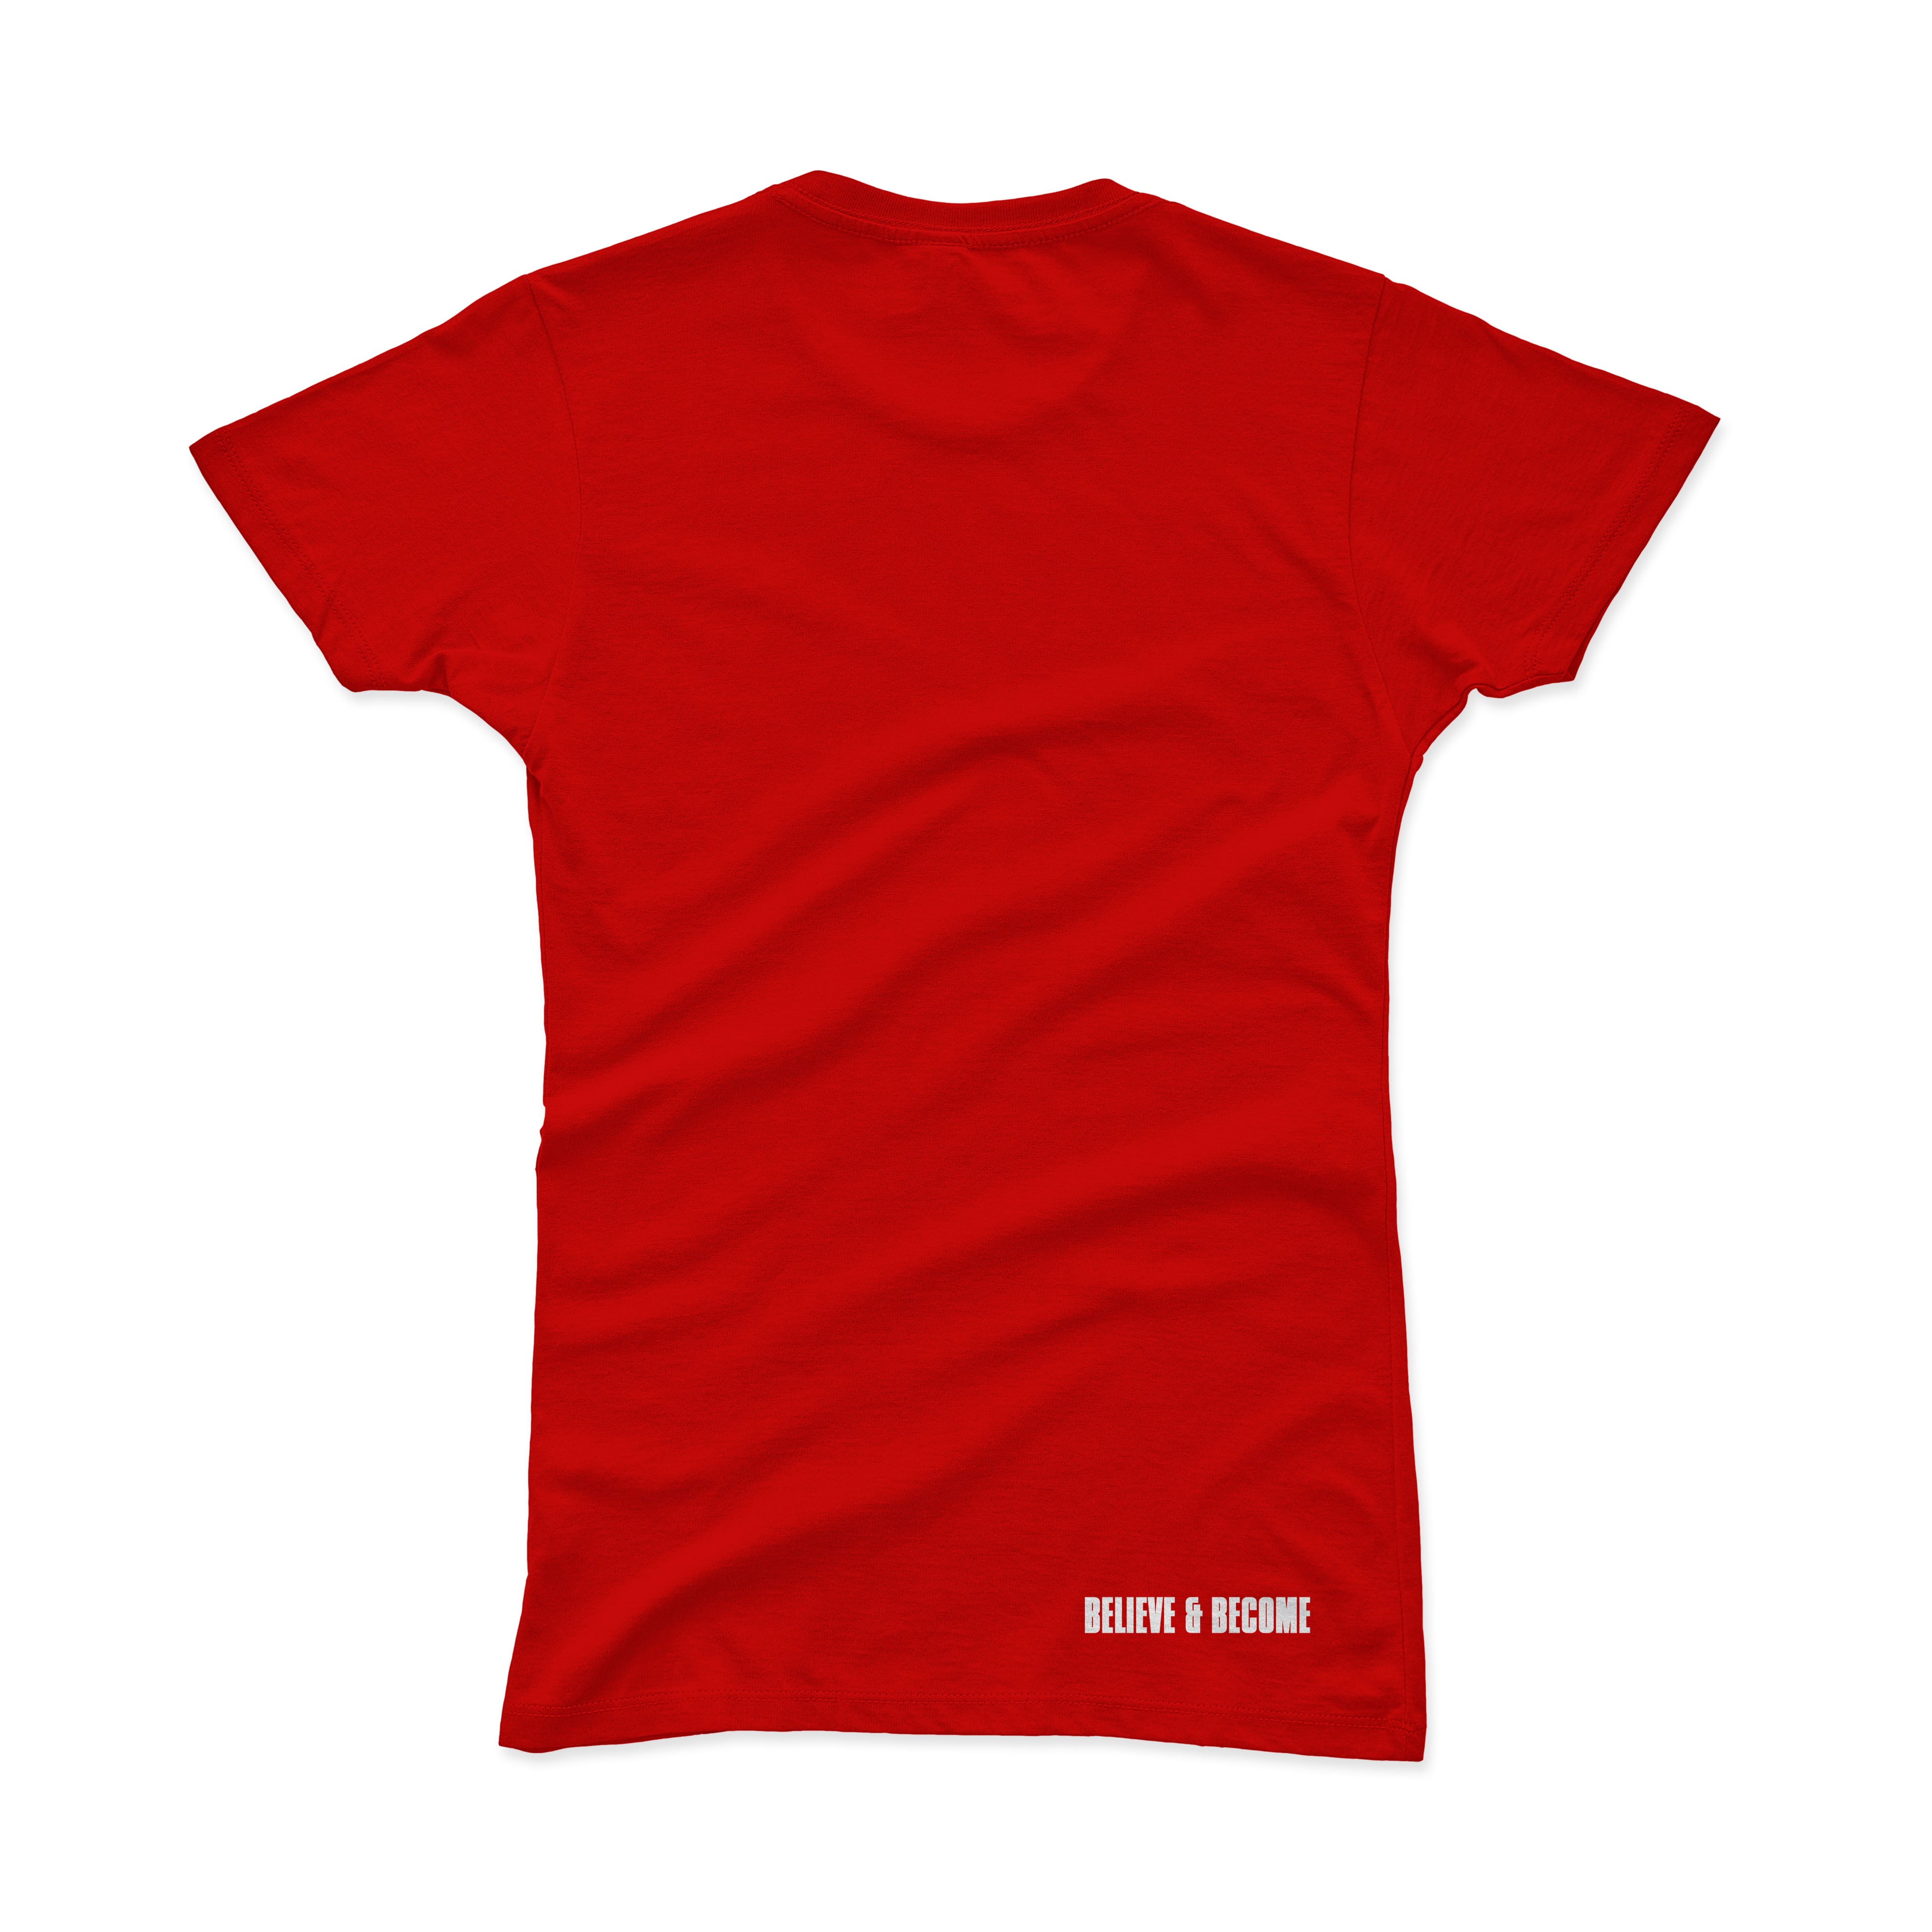 Women's Gradu8 Script Logo Premium T-shirt - Red